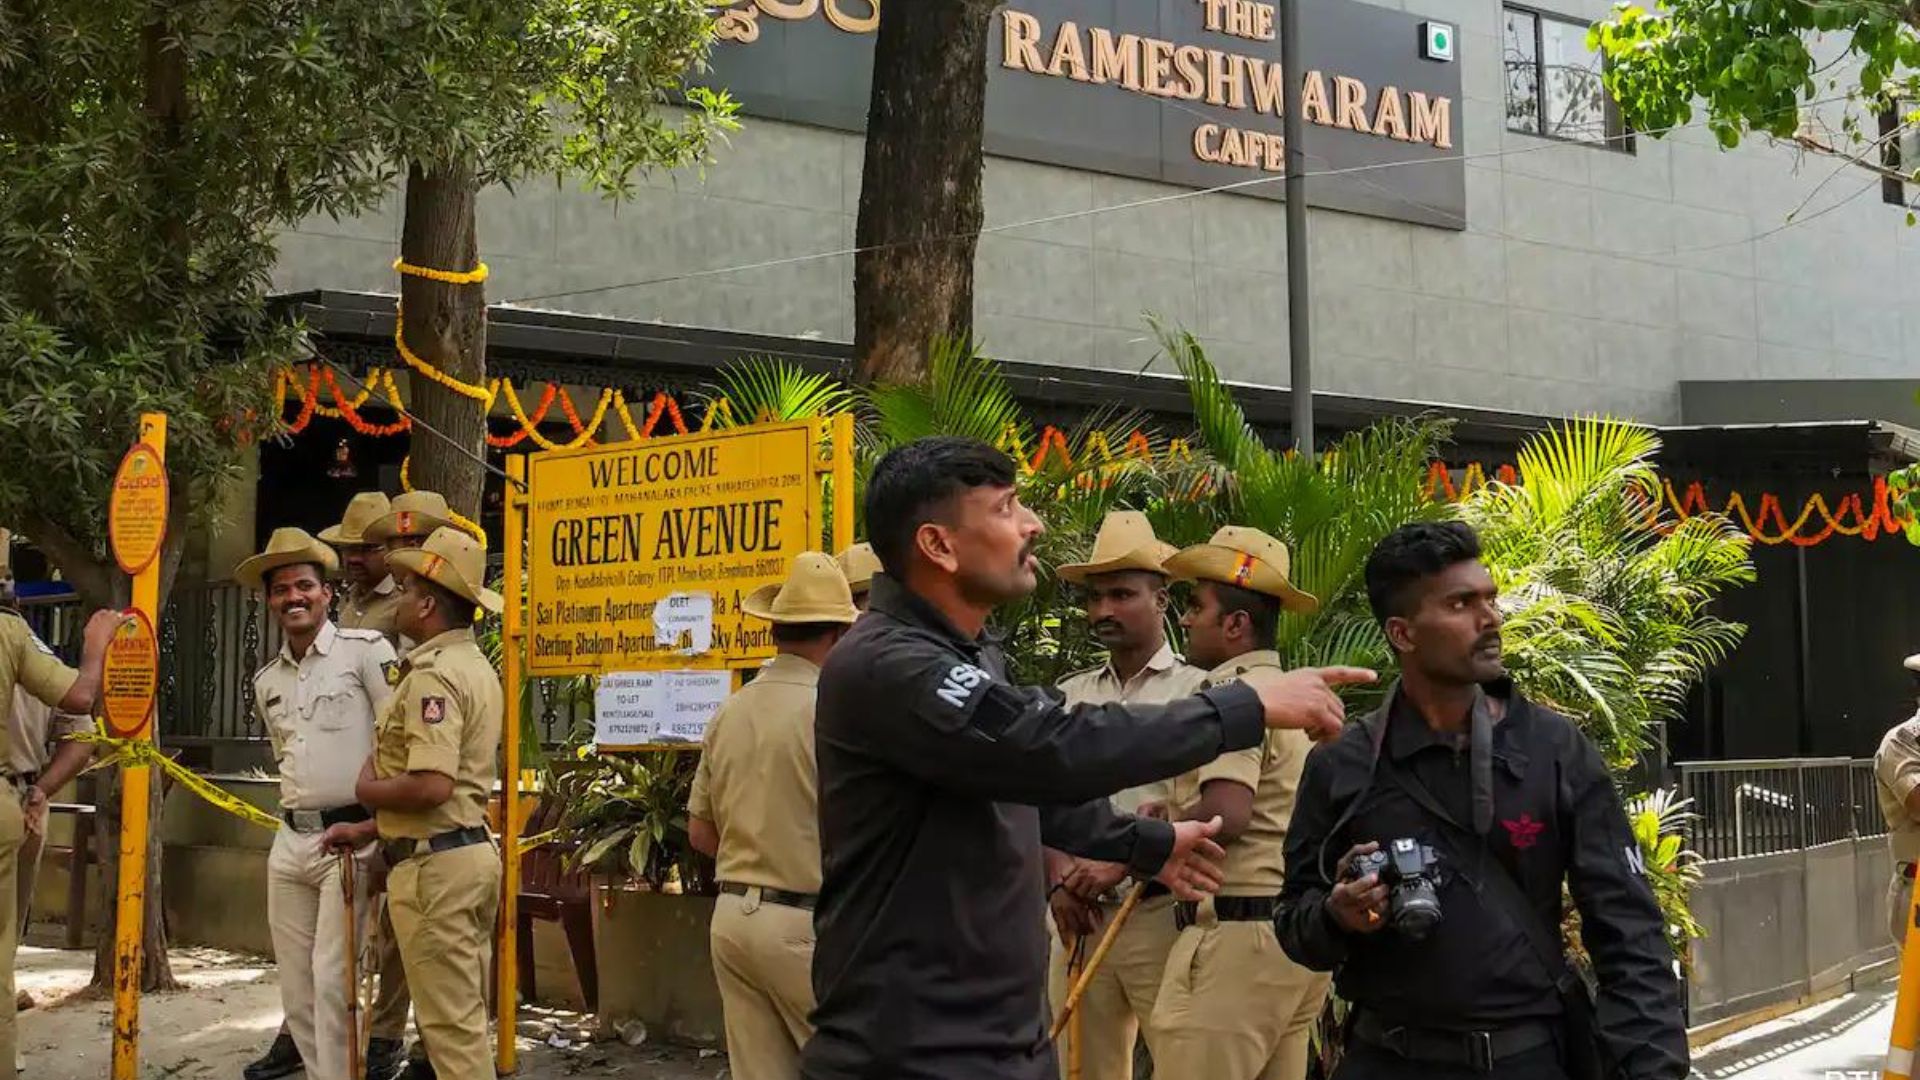 NIA Apprehends Main Suspect in Rameshwaram Cafe Blast